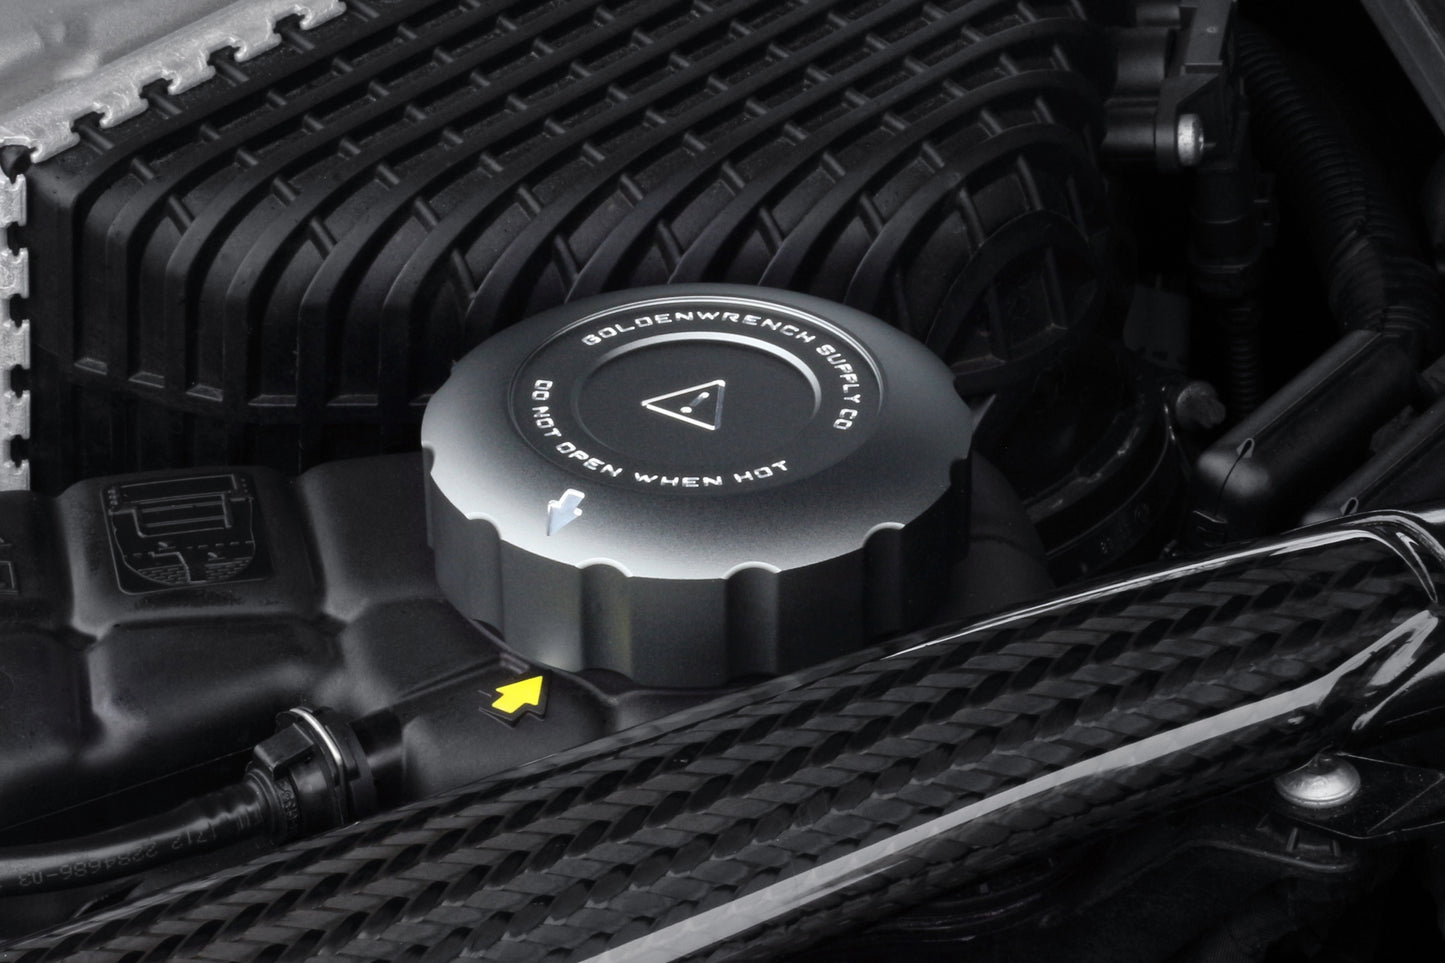 BMW M Series Blackline Performance Coolant Expansion Tank Cap Cover